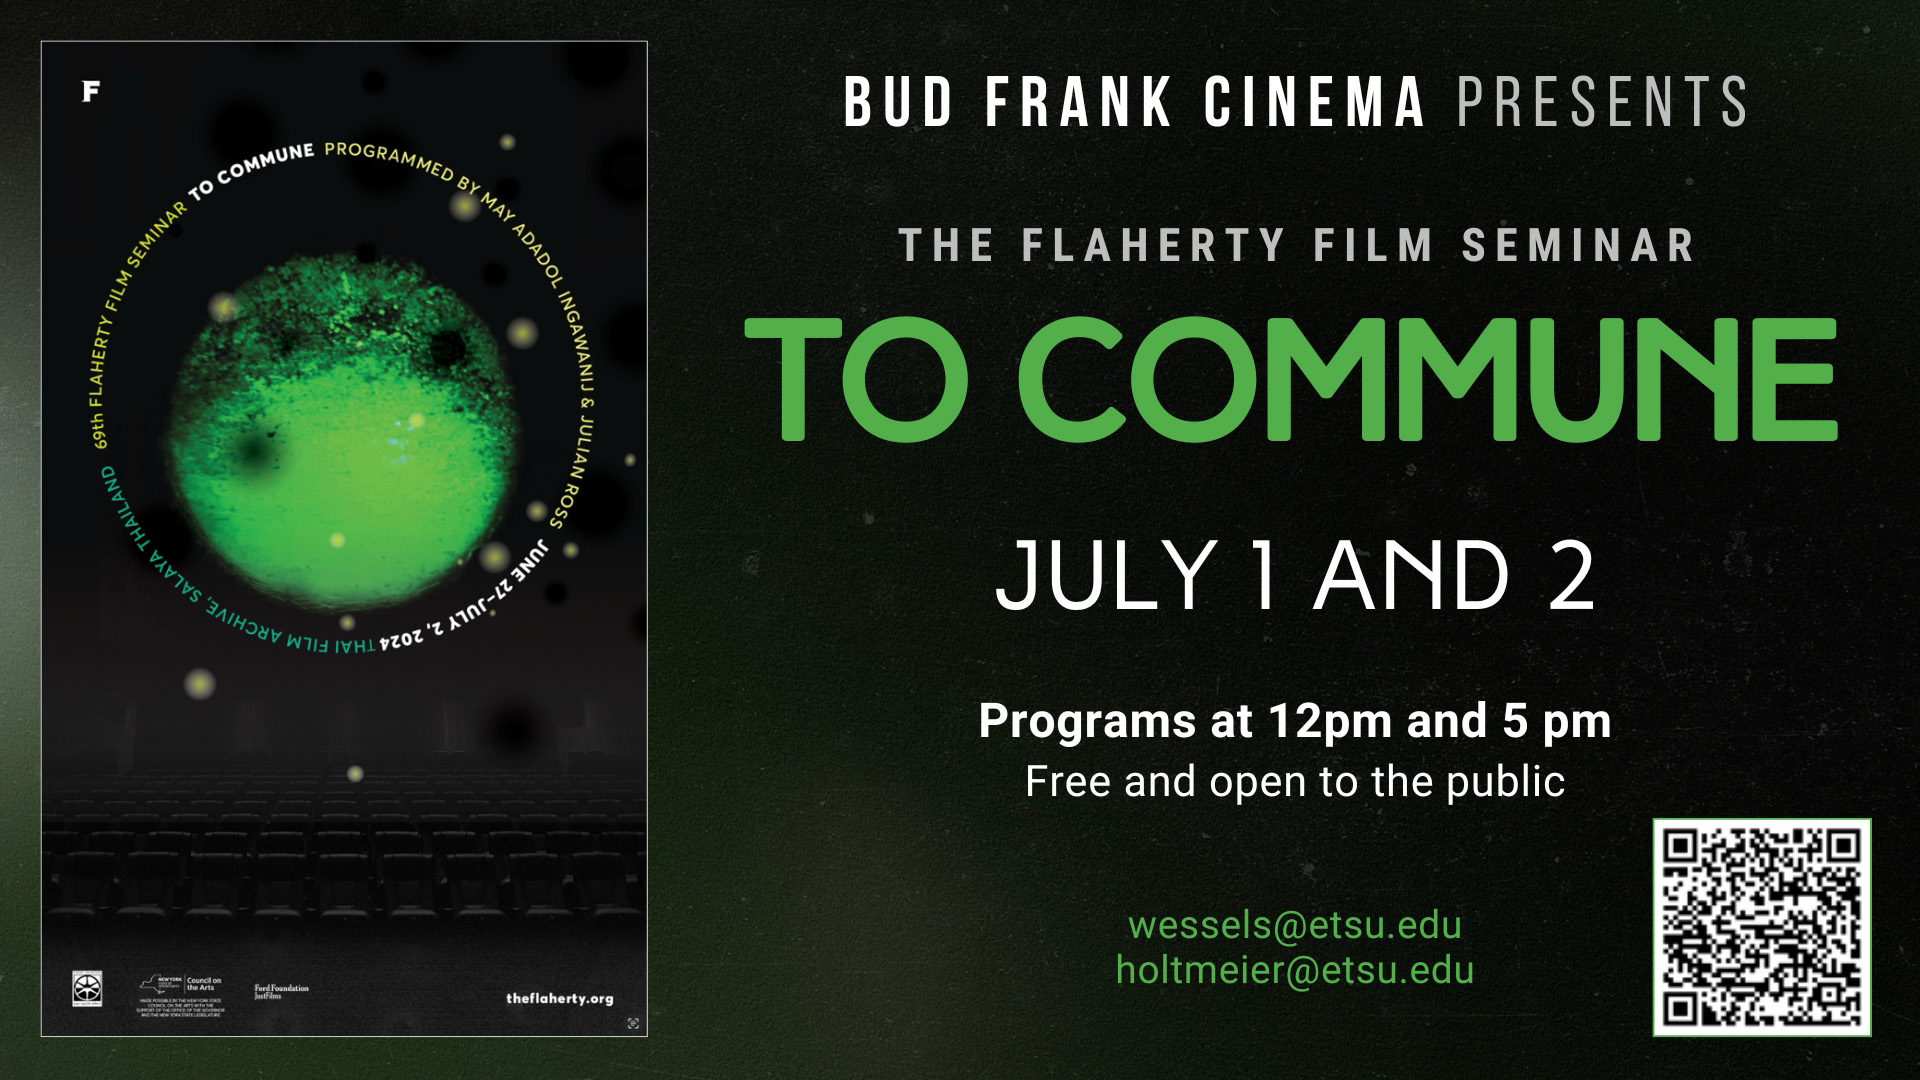 Bud Frank Cinema Presents The Flaherty Film Seminar To Commune